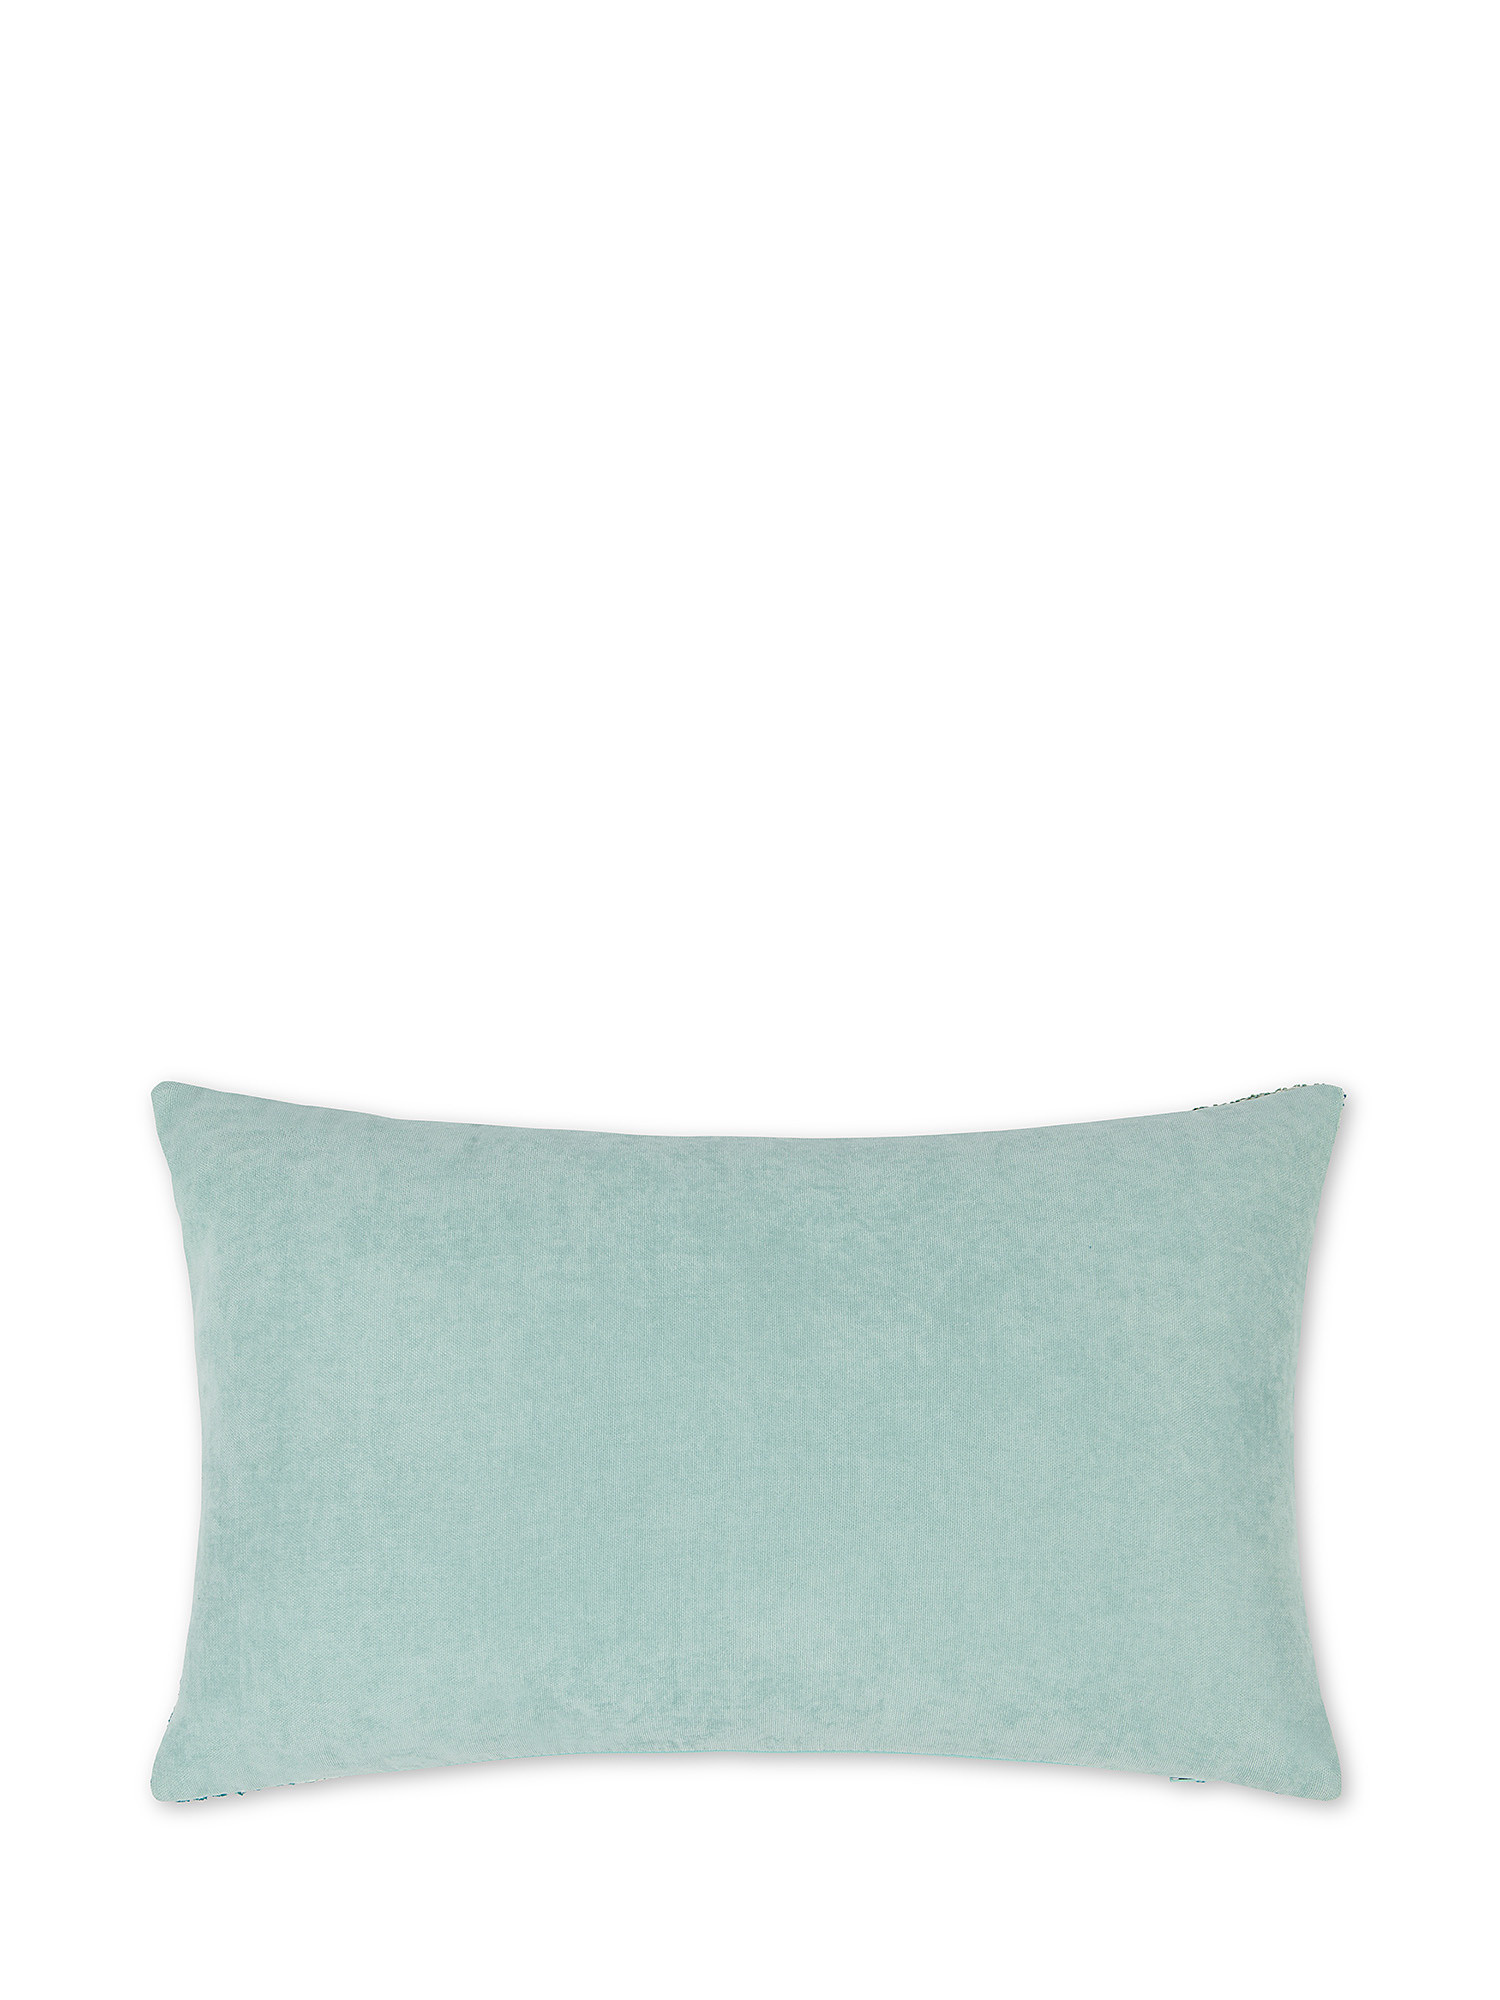 Cushion 35x55 cm with shade, White / Blue, large image number 1